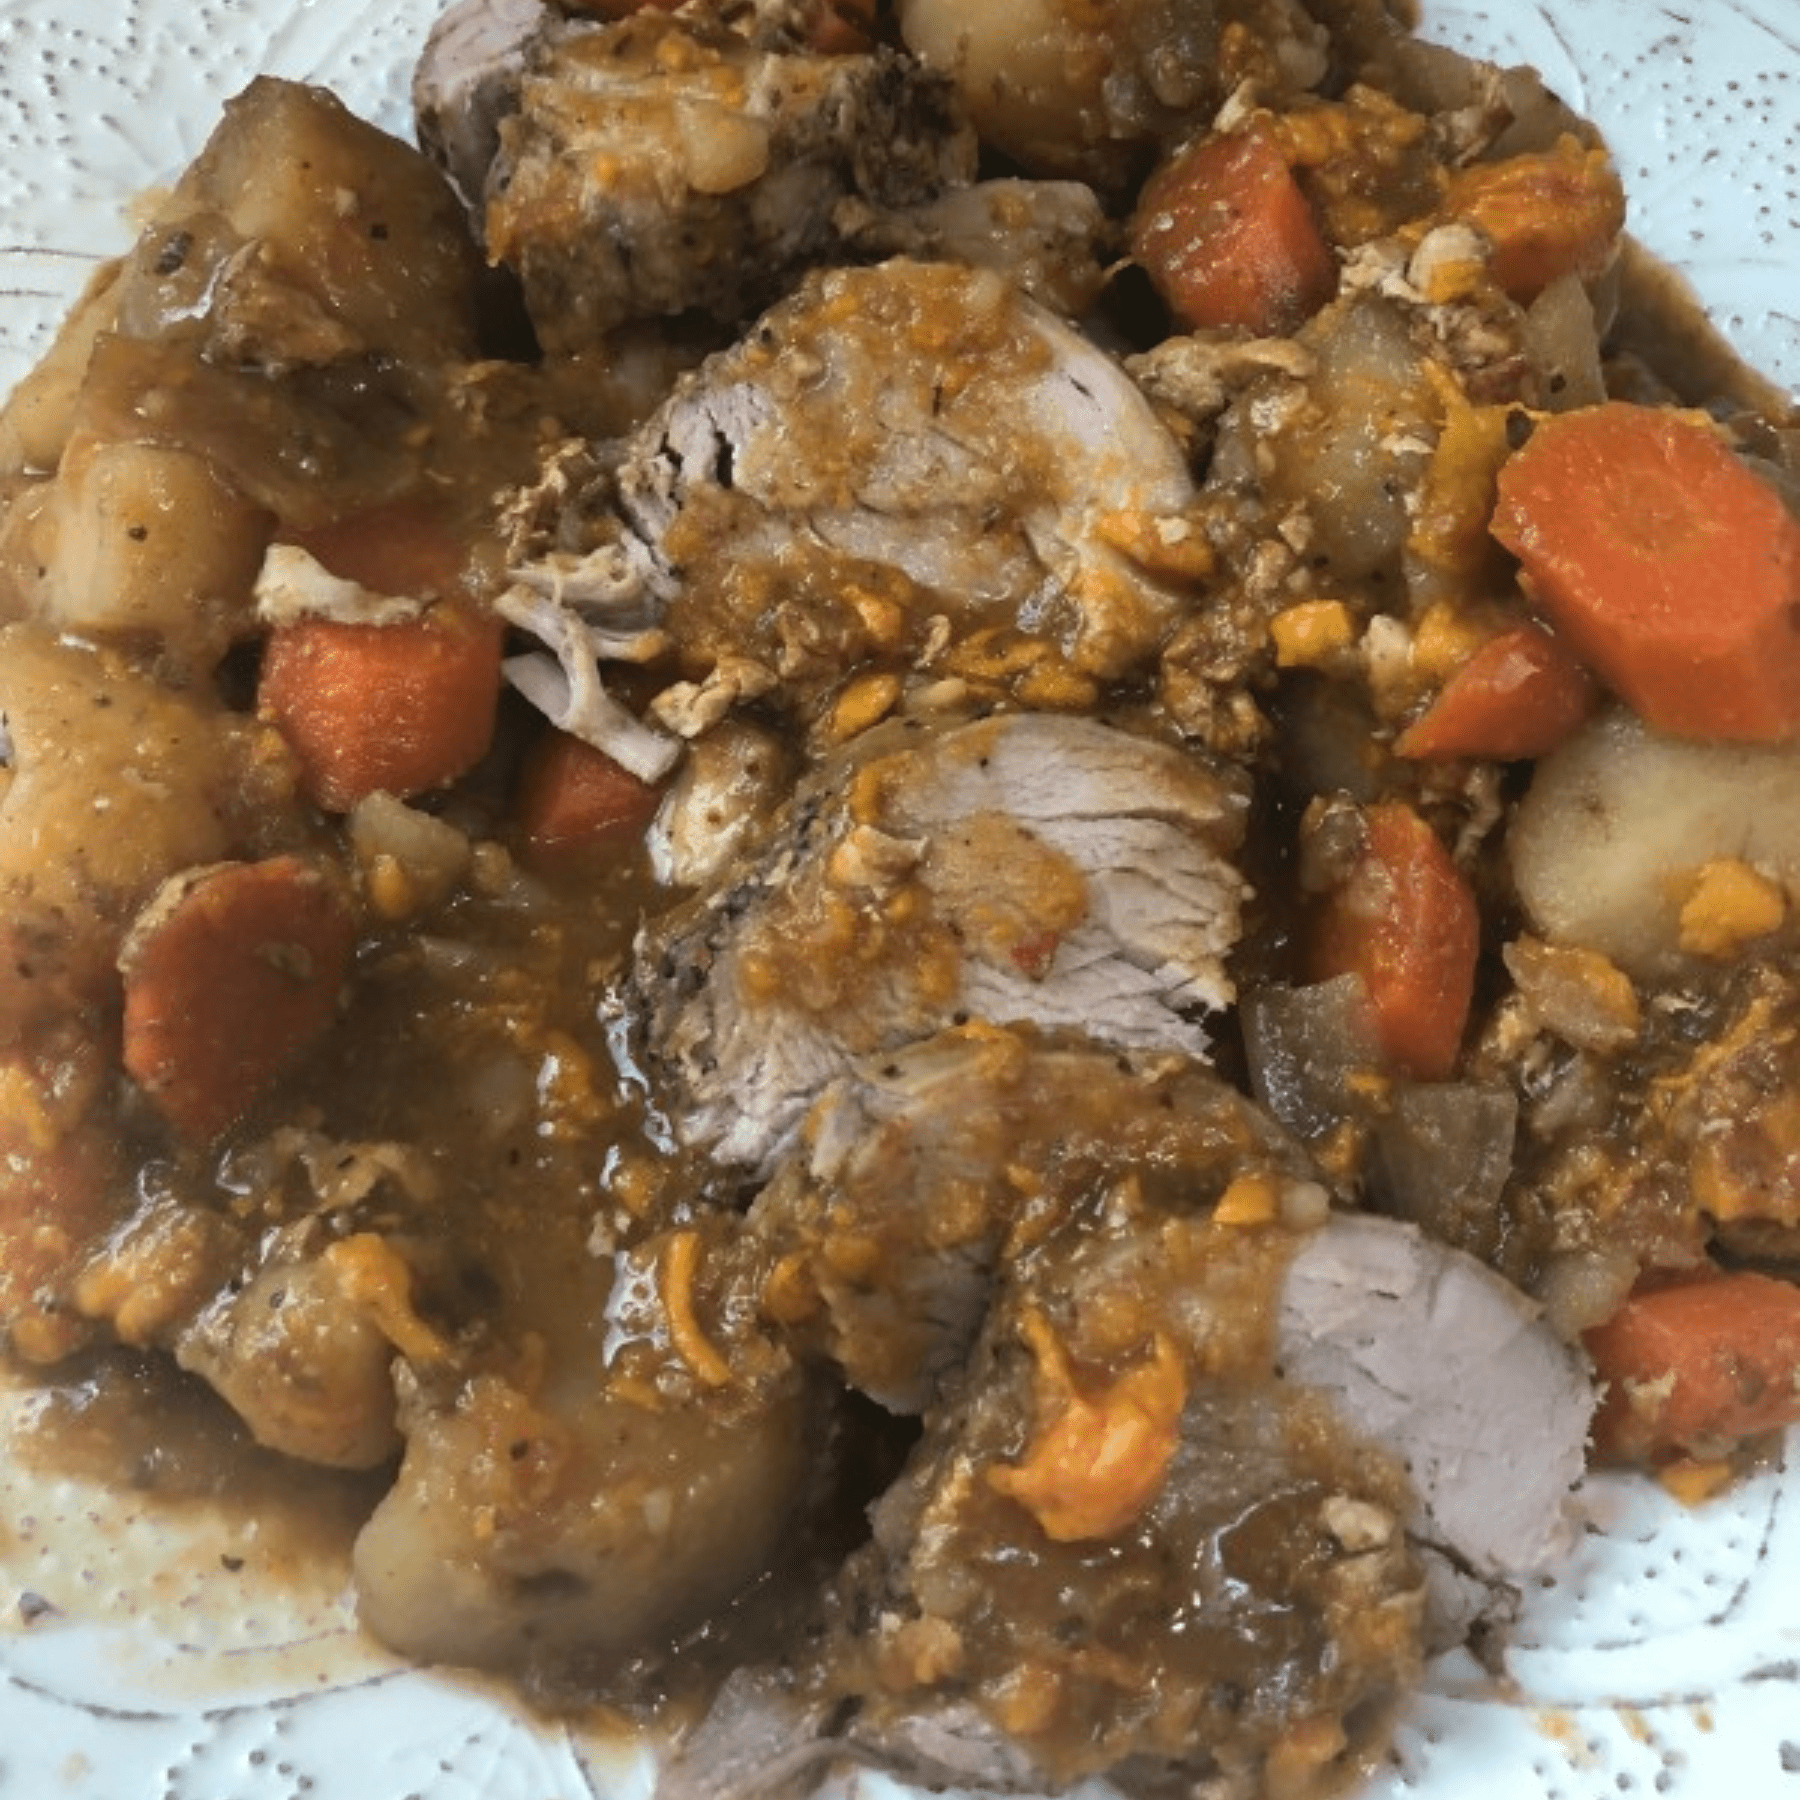 Italian pork loin with carrots and potatoes